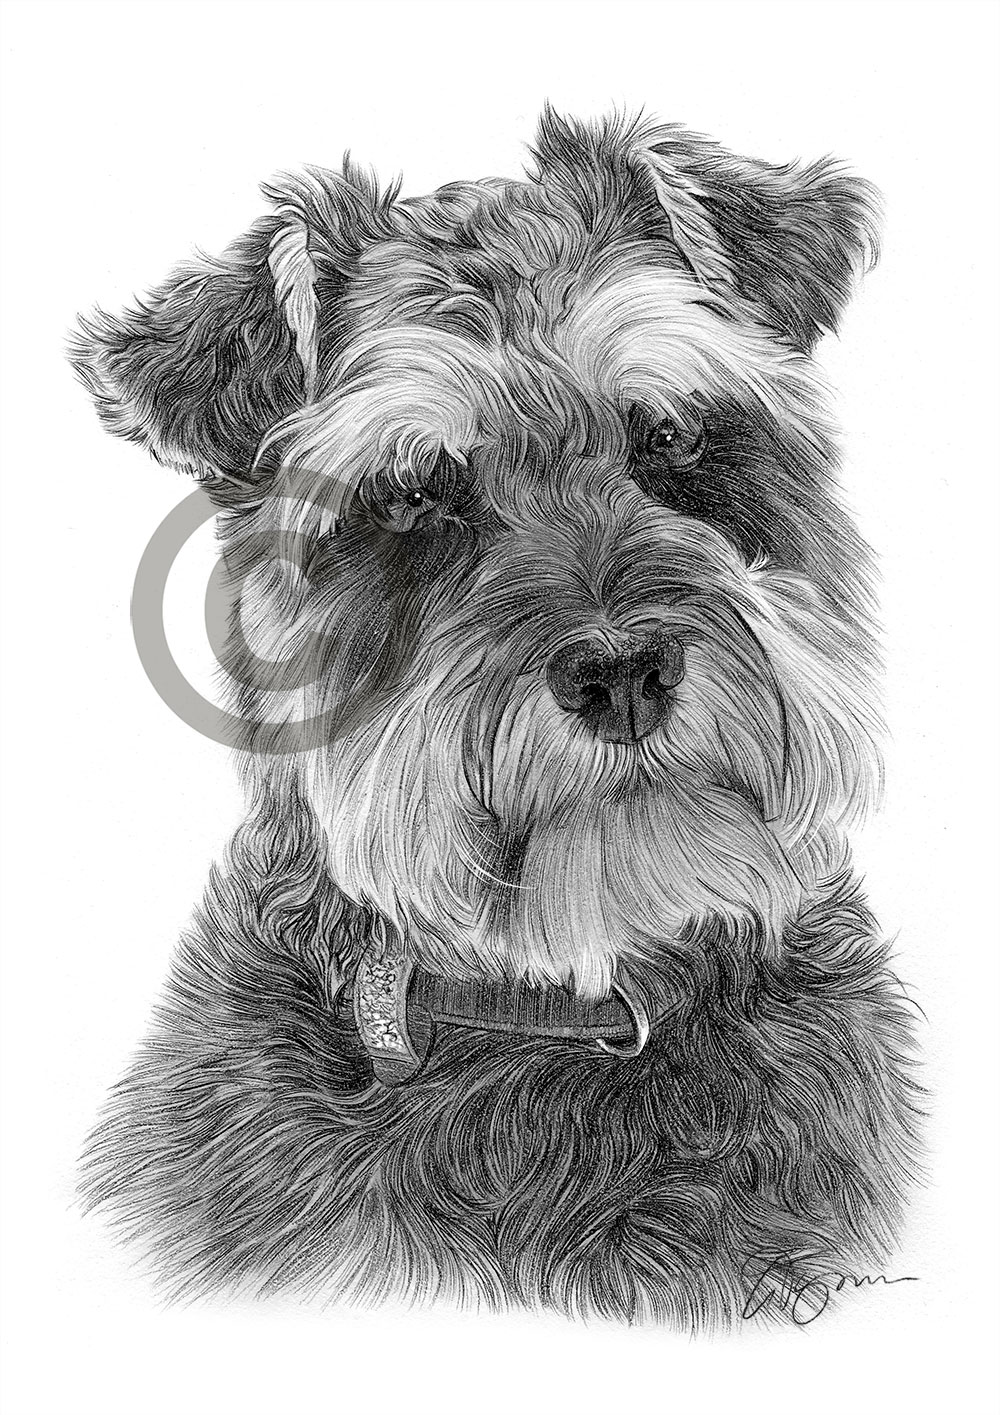 SCHNAUZER art dog pencil drawing print A4 only signed pet portrait eBay